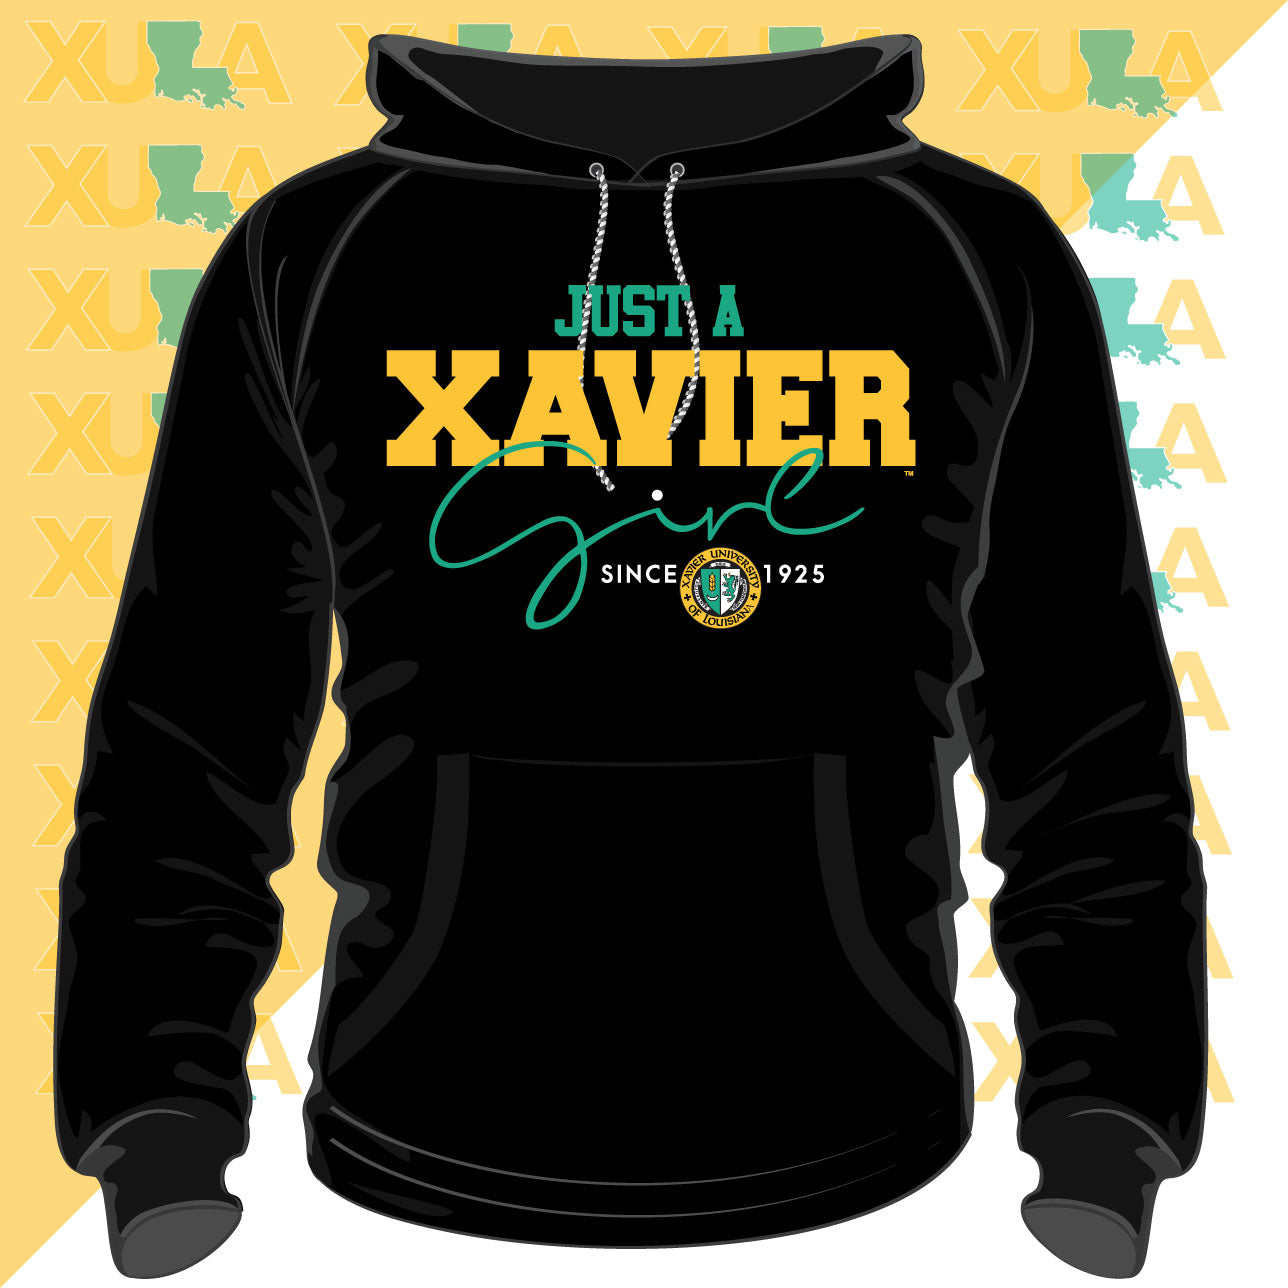 Xavier University of Louisiana Keychains & Lanyards, Xavier